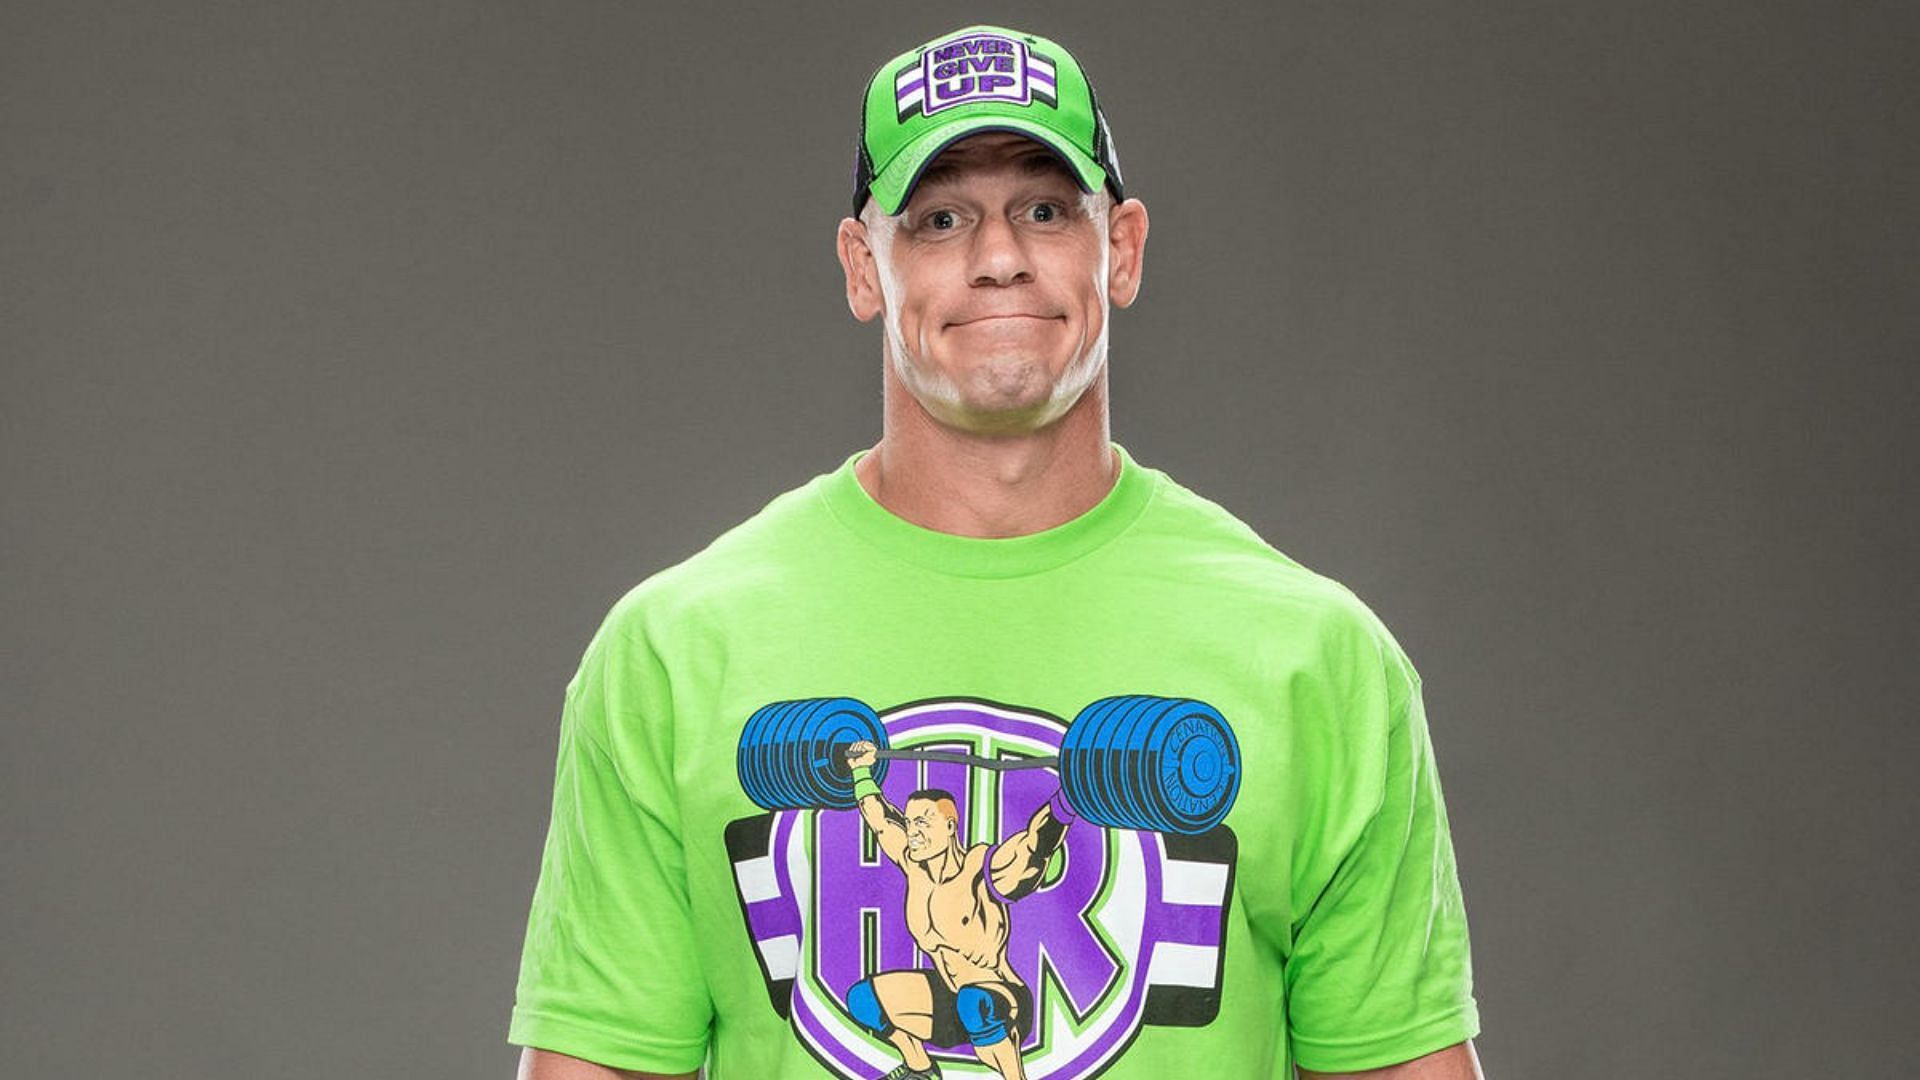 John Cena debuted on WWE